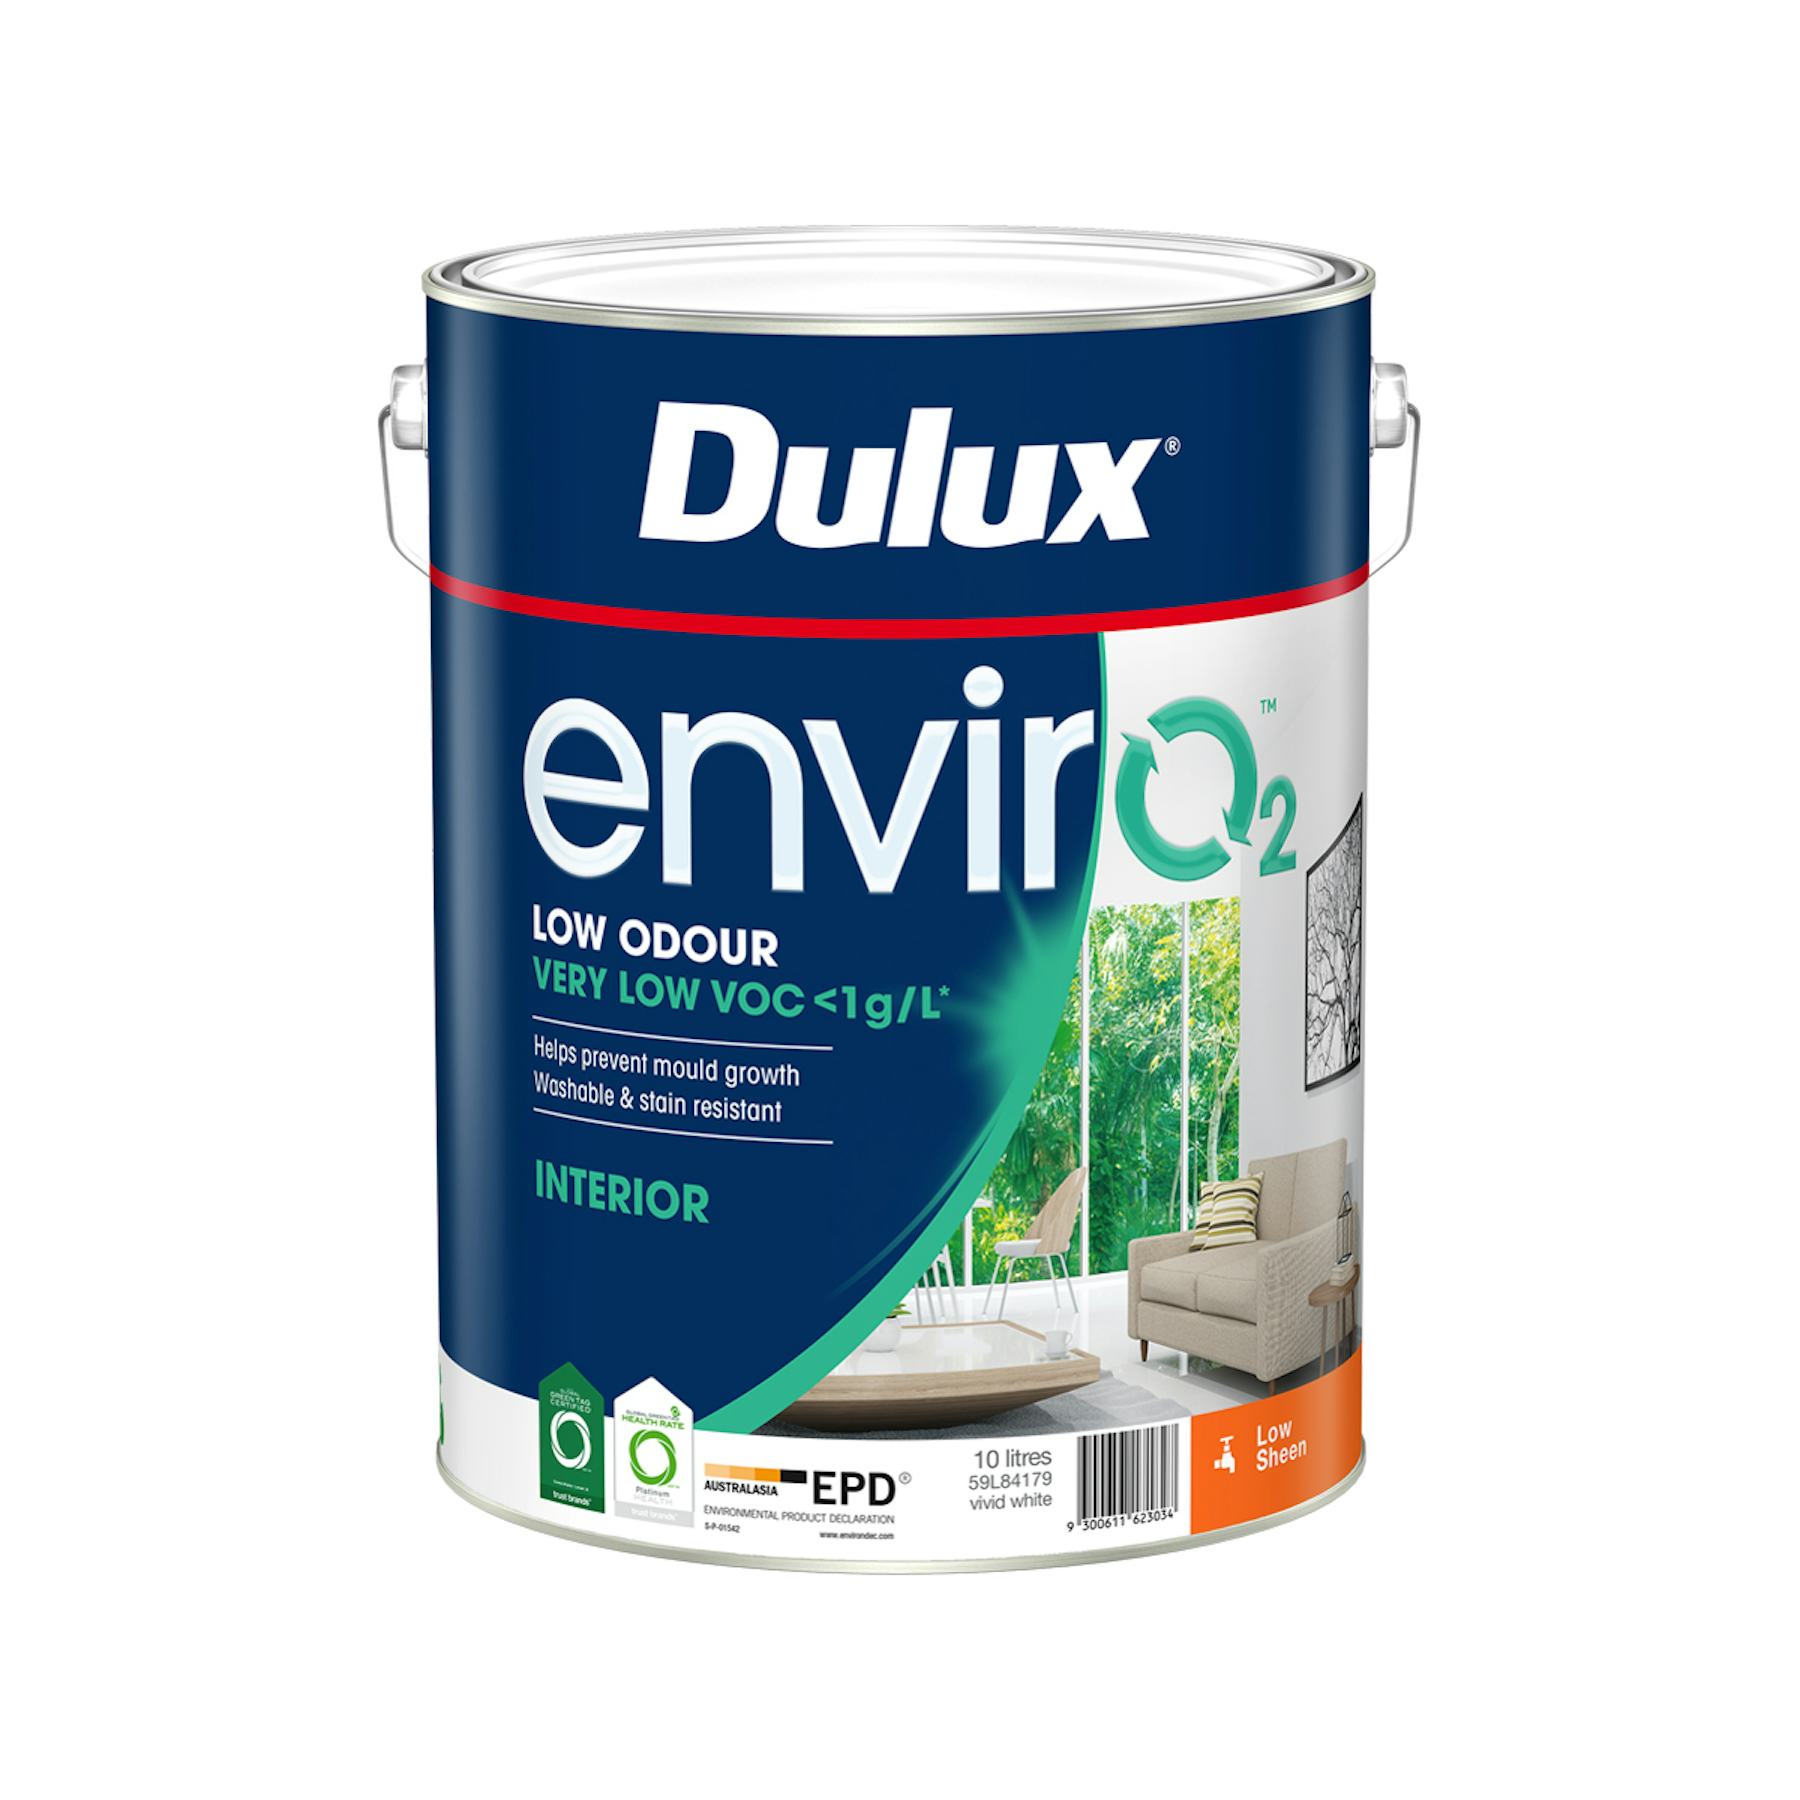 Dulux EnvirO2 Interior Low Sheen 10l ?w=900&h=900&auto=format&dpr=2&q=50